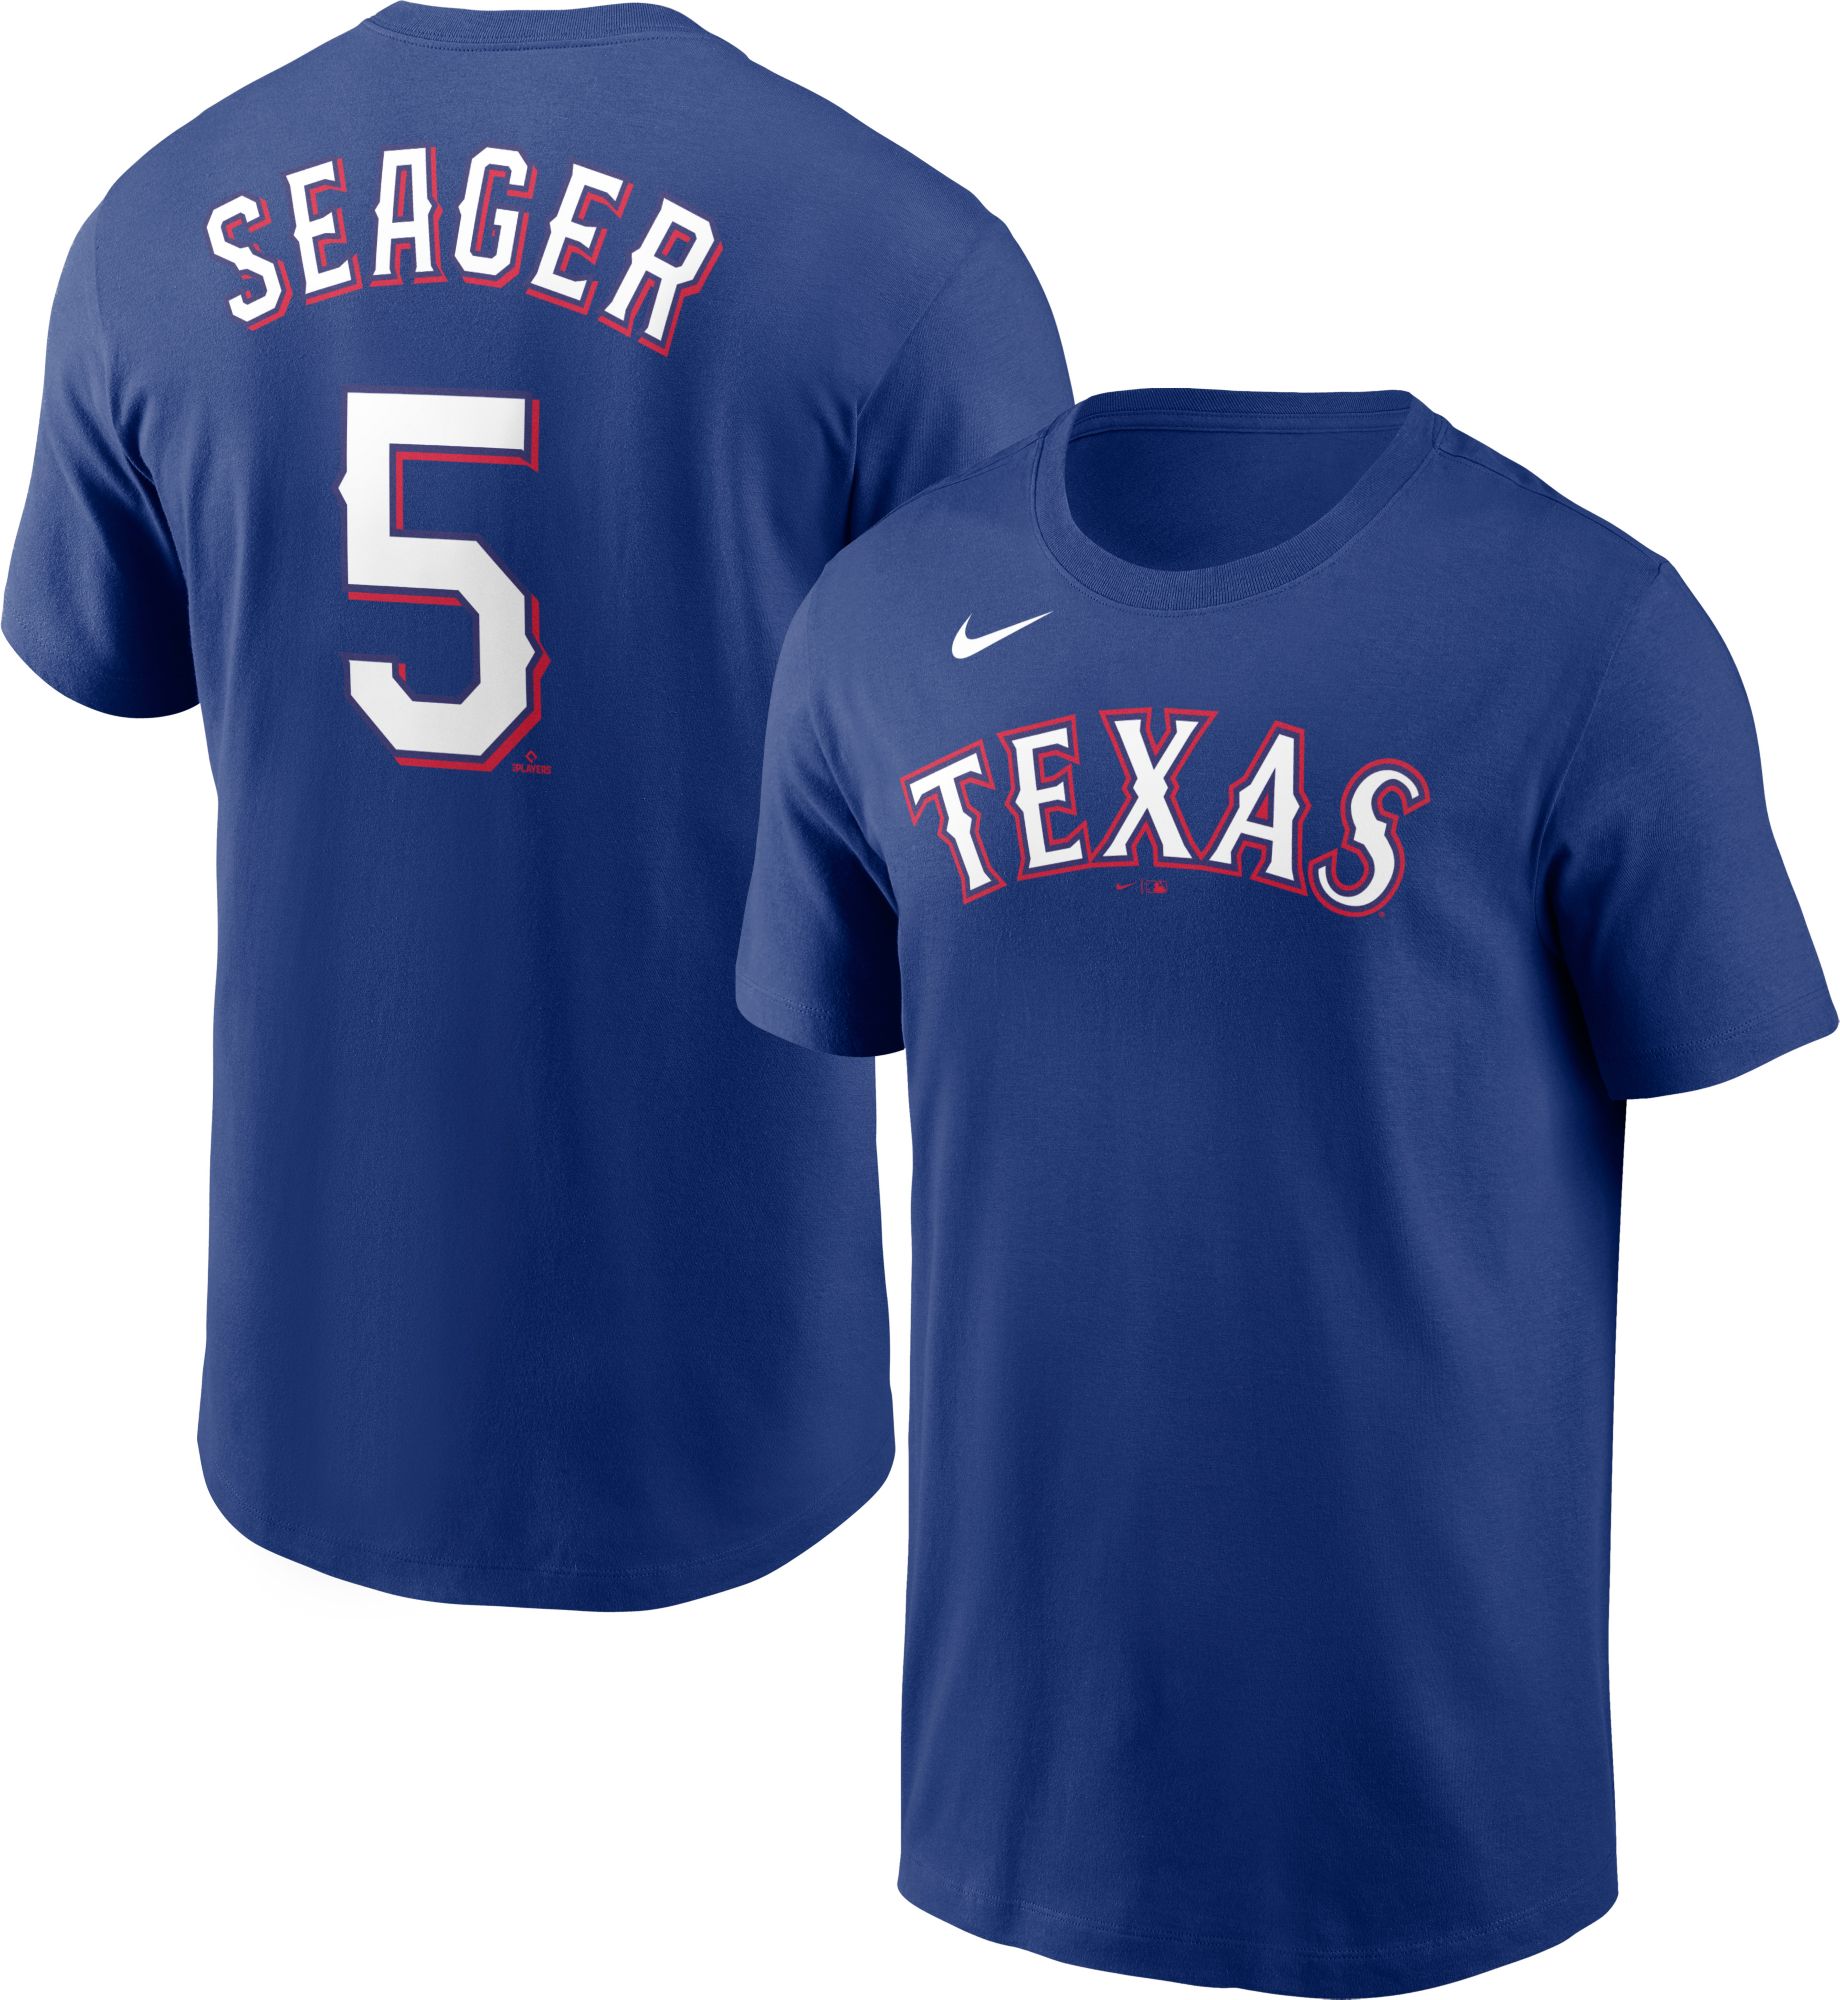 Nike / Men's Texas Rangers Corey Seager #5 Blue T-Shirt